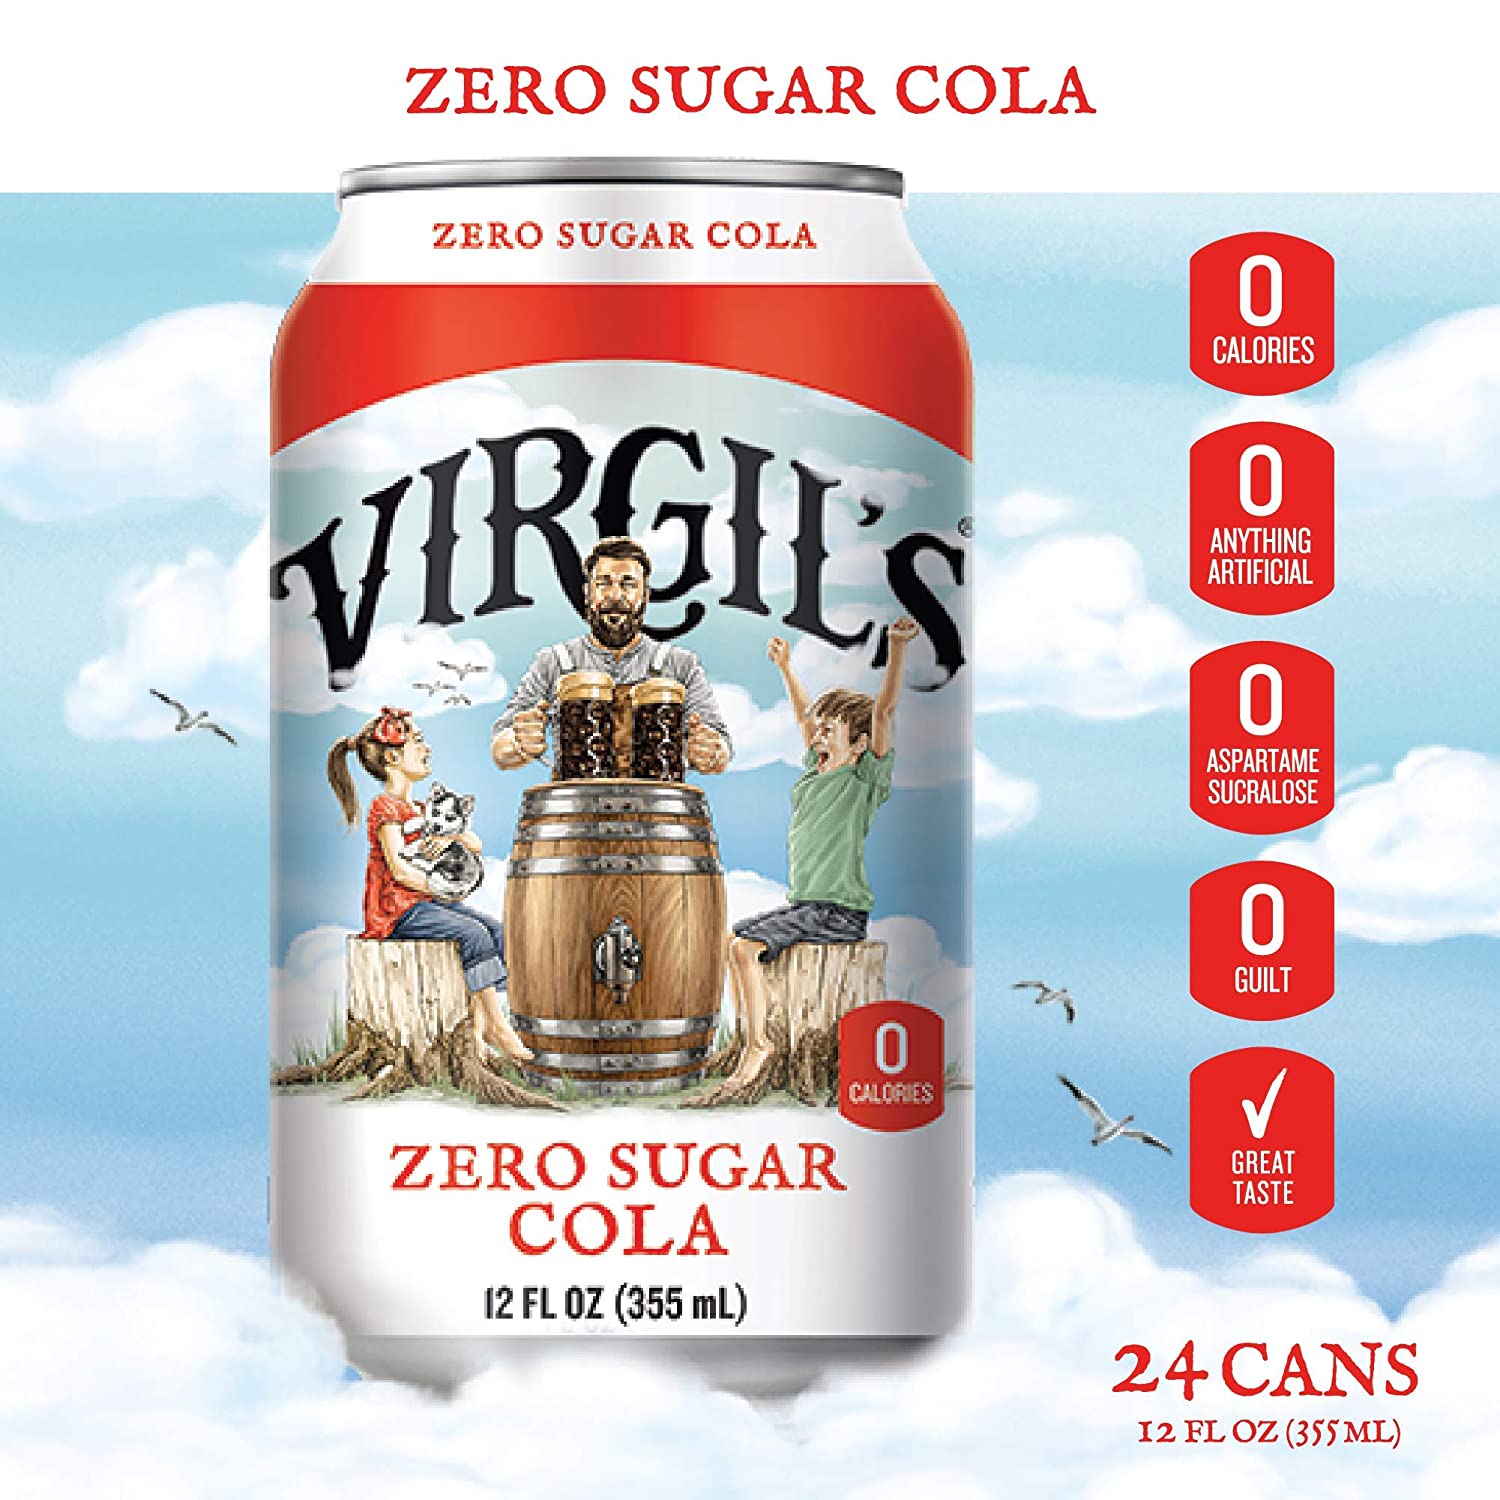 Virgil's Zero sugar cola benefits